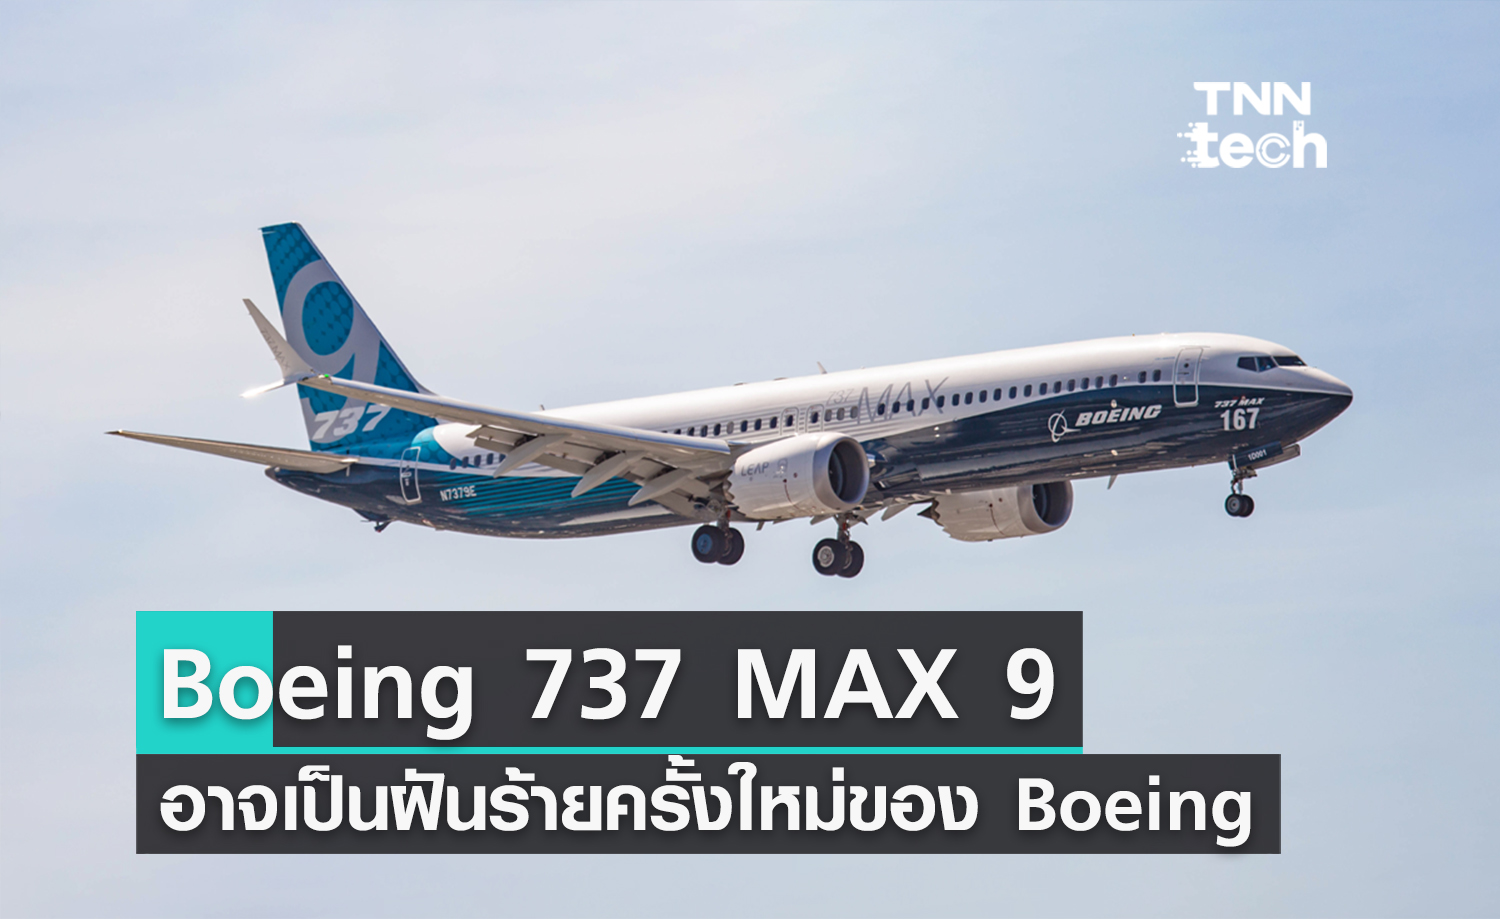 737 MAX 9 เครื่องบินที่อาจเป็นฝันร้ายของ Boeing อีกครั้ง หลังเกิดอุบัติเหตุประตูเครื่องบินหลุด